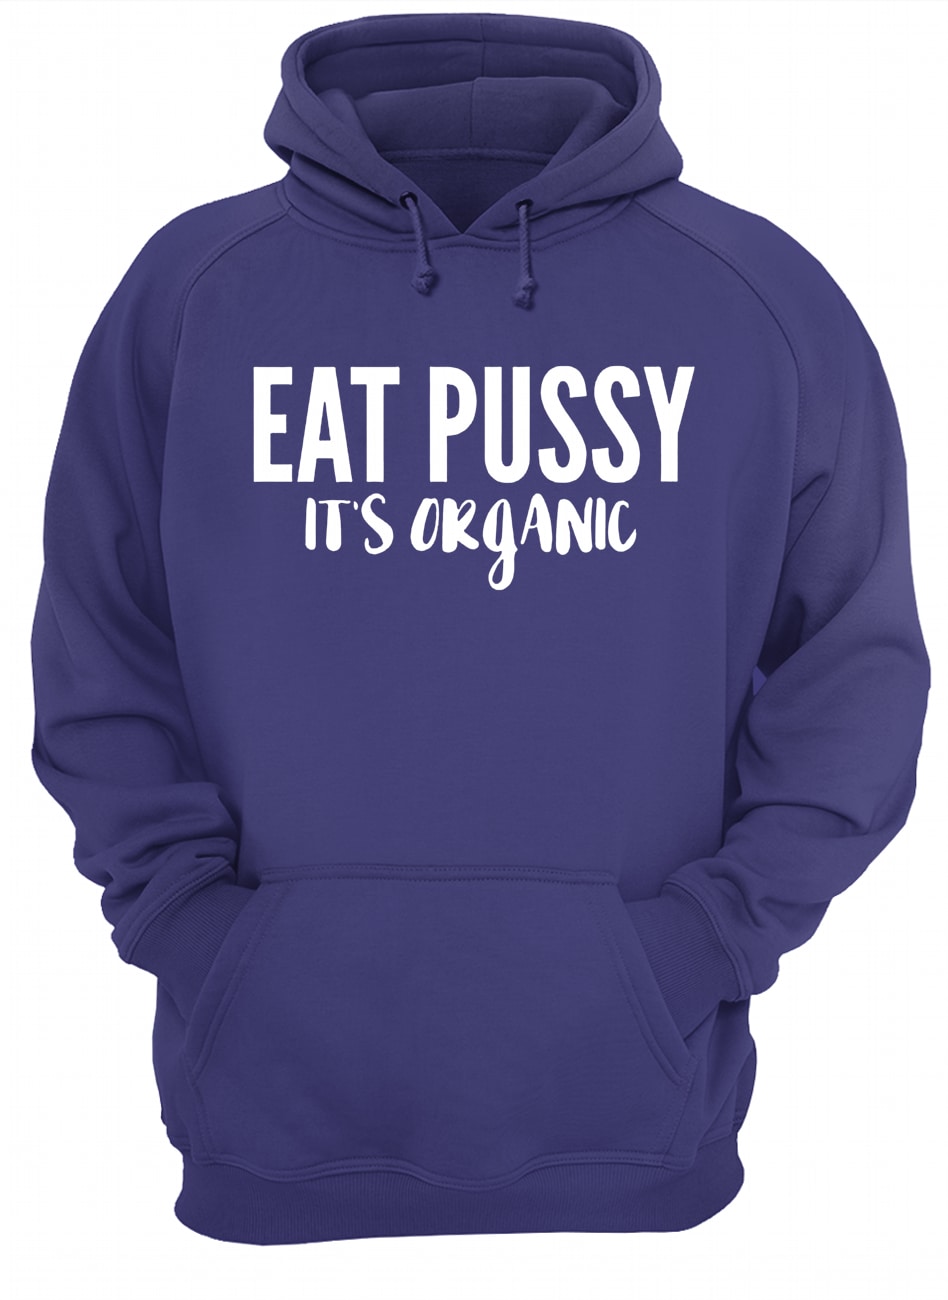 Eat pussy it's organic hoodie